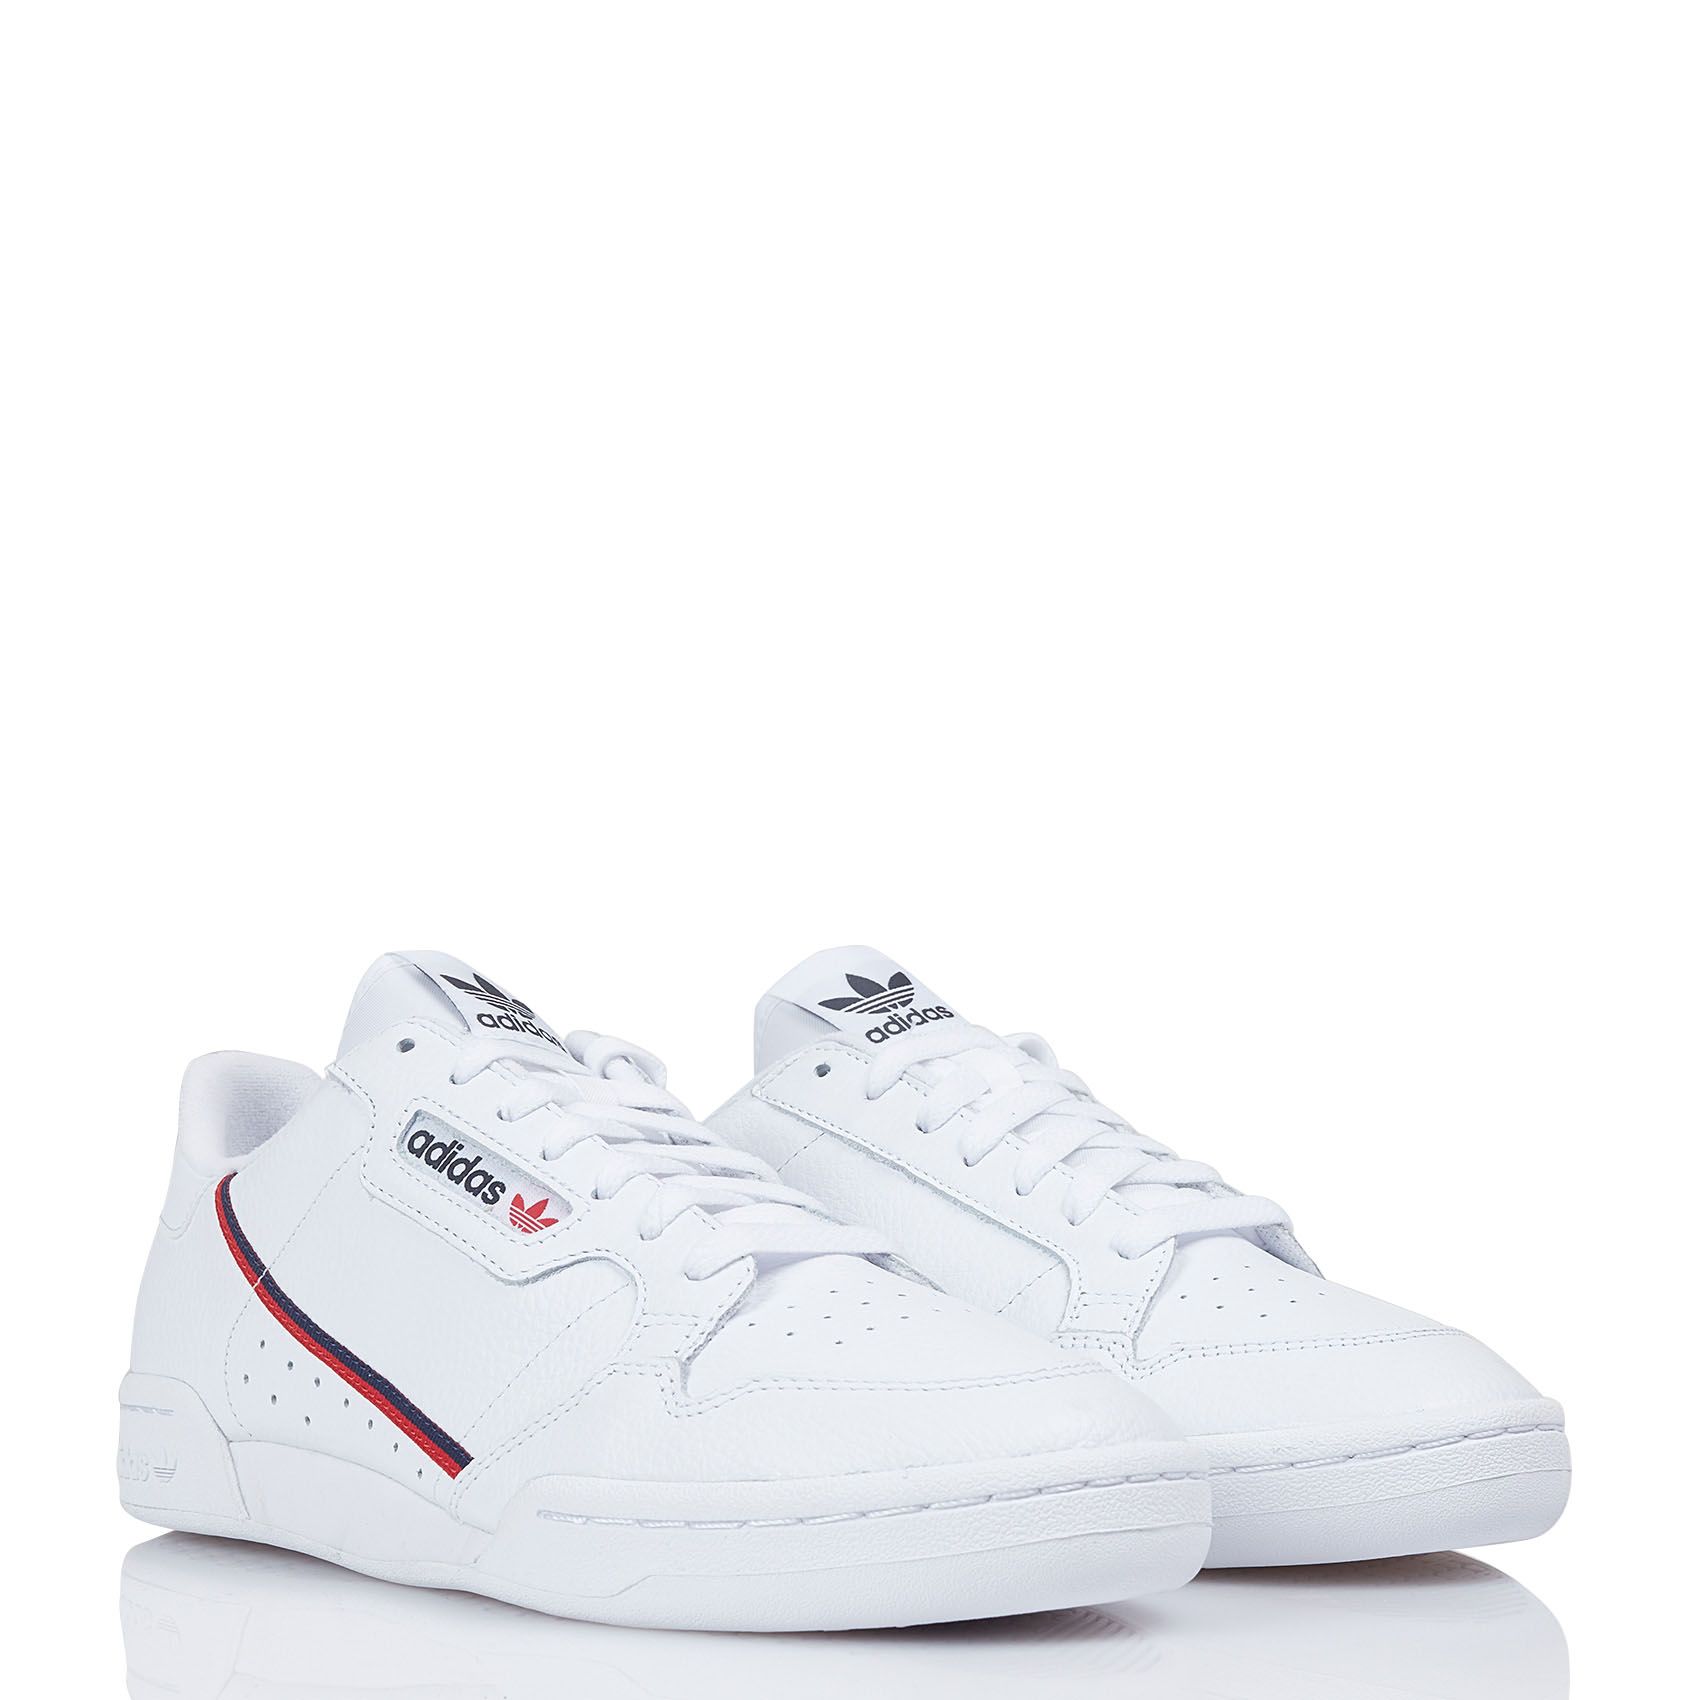 Adidas white leather sneakers | eBay